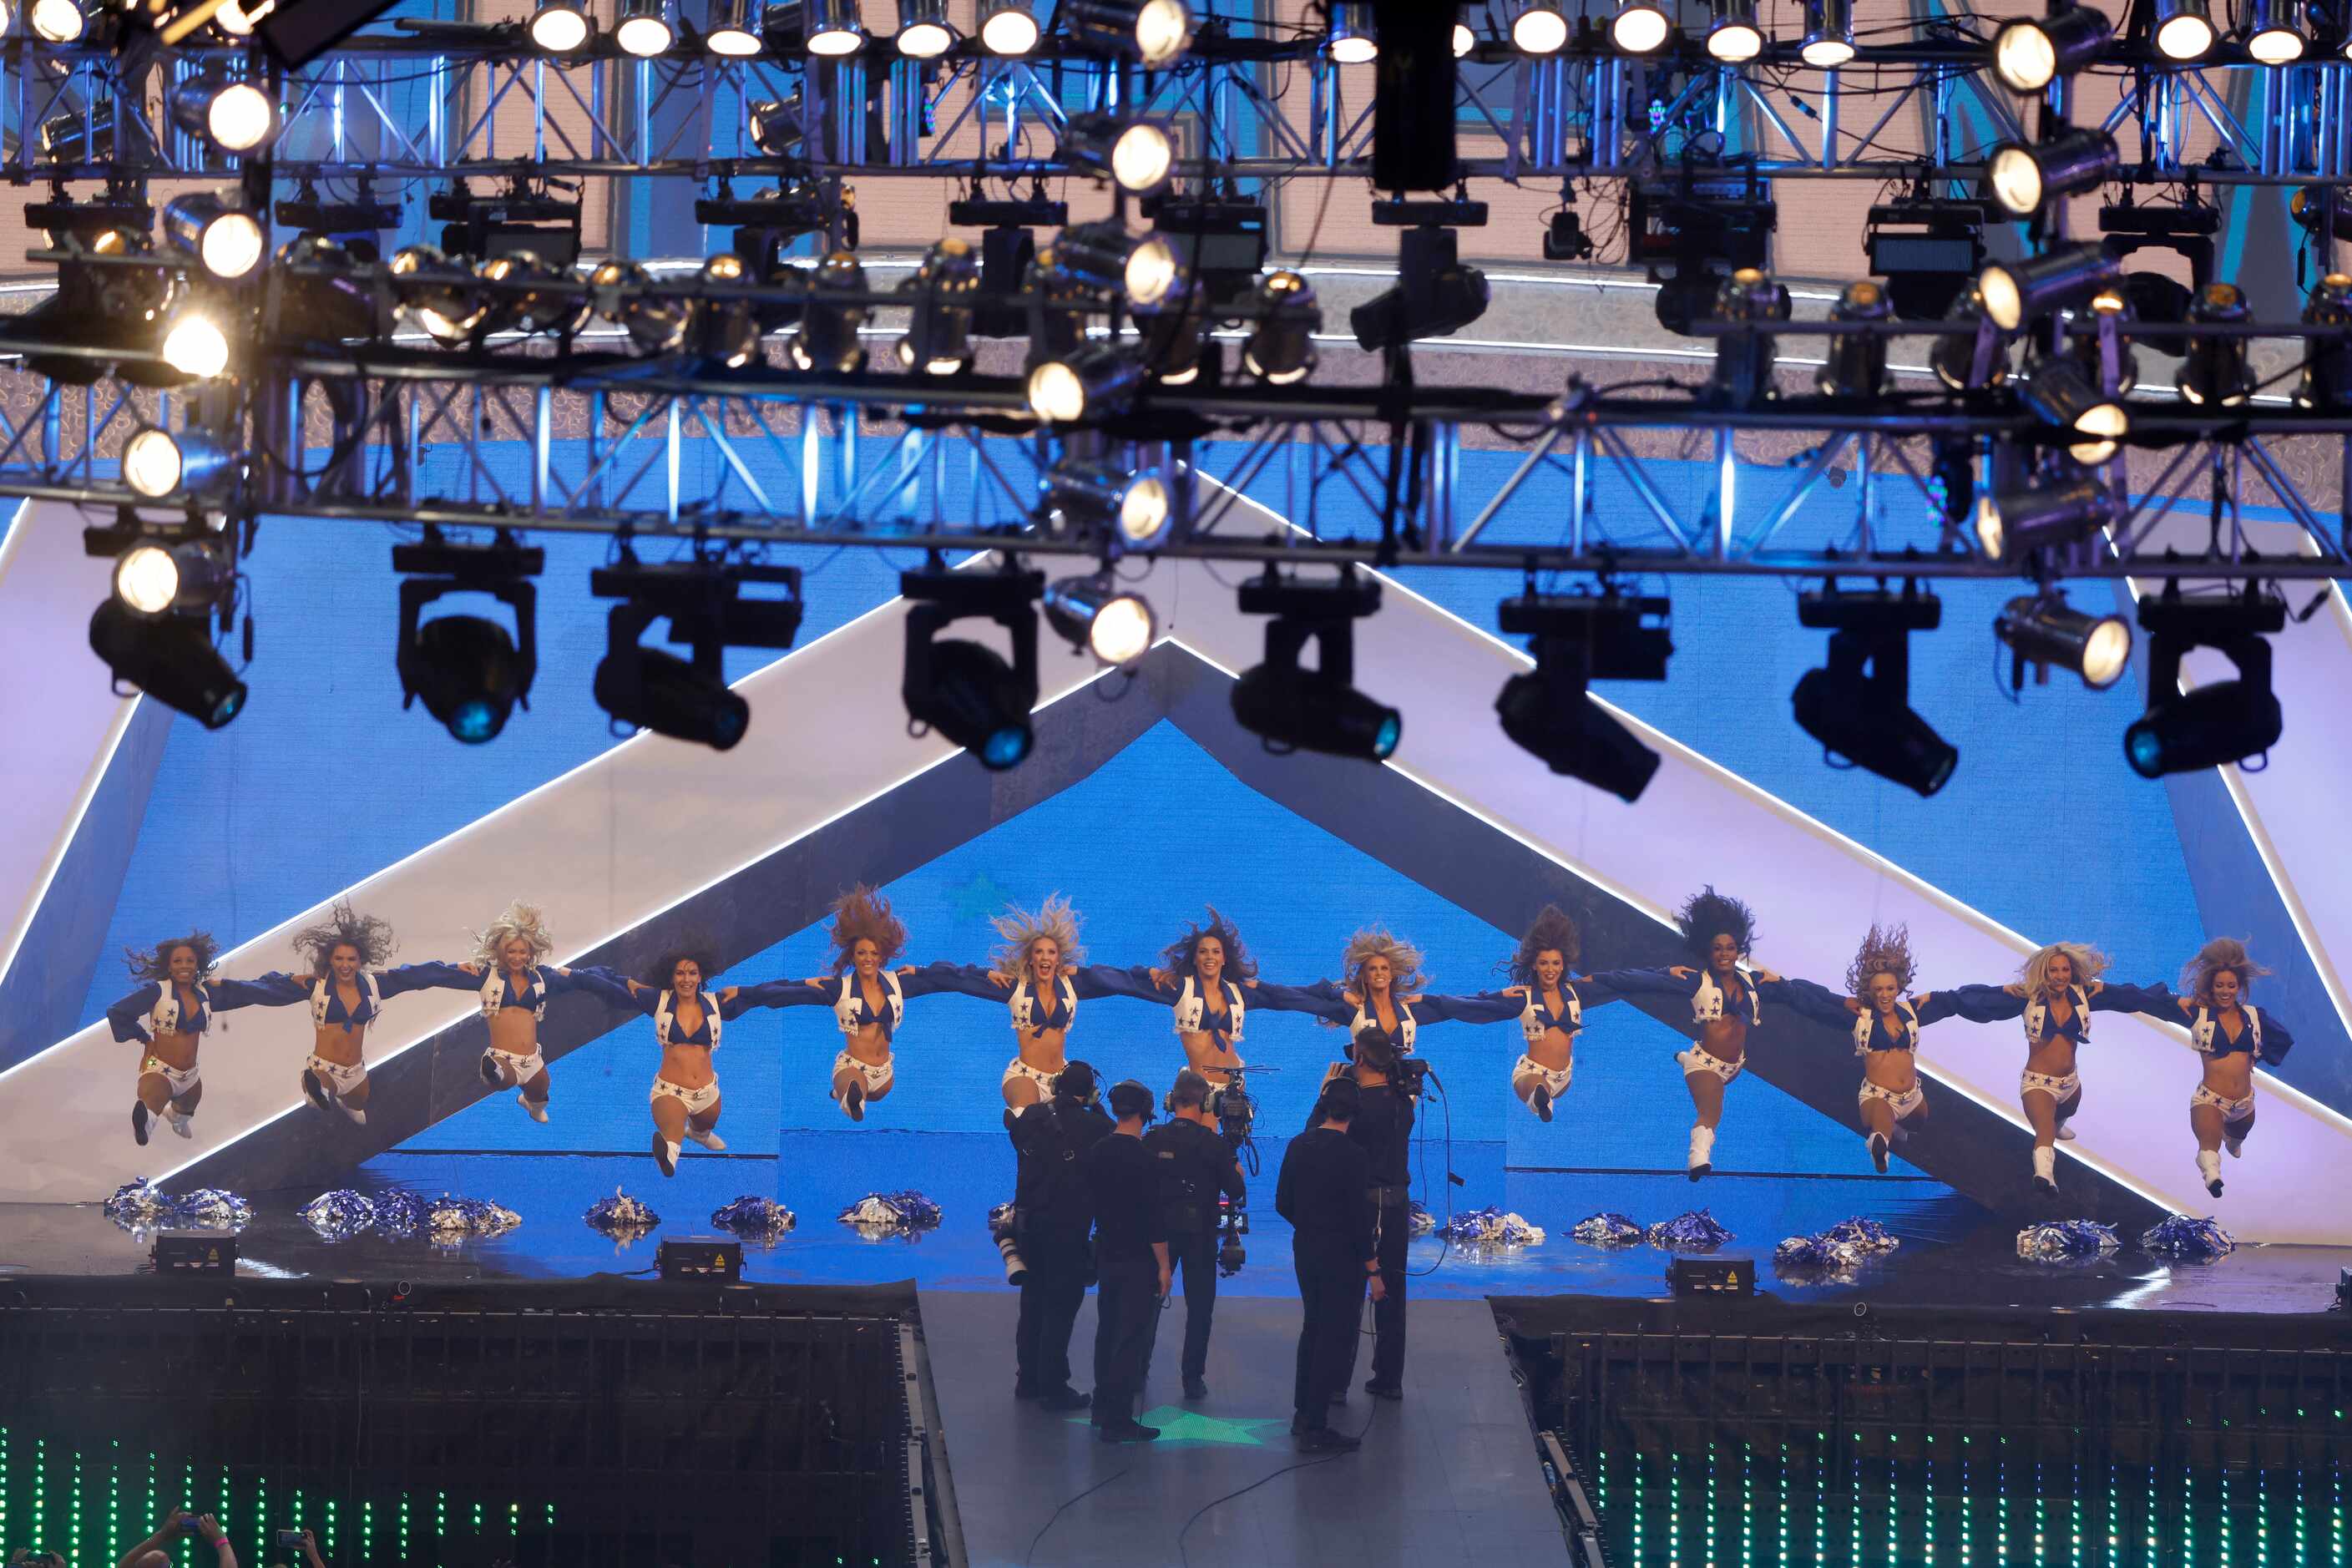 The Dallas Cowboys Cheerleaders perform during WrestleMania in Arlington, Texas on Saturday,...